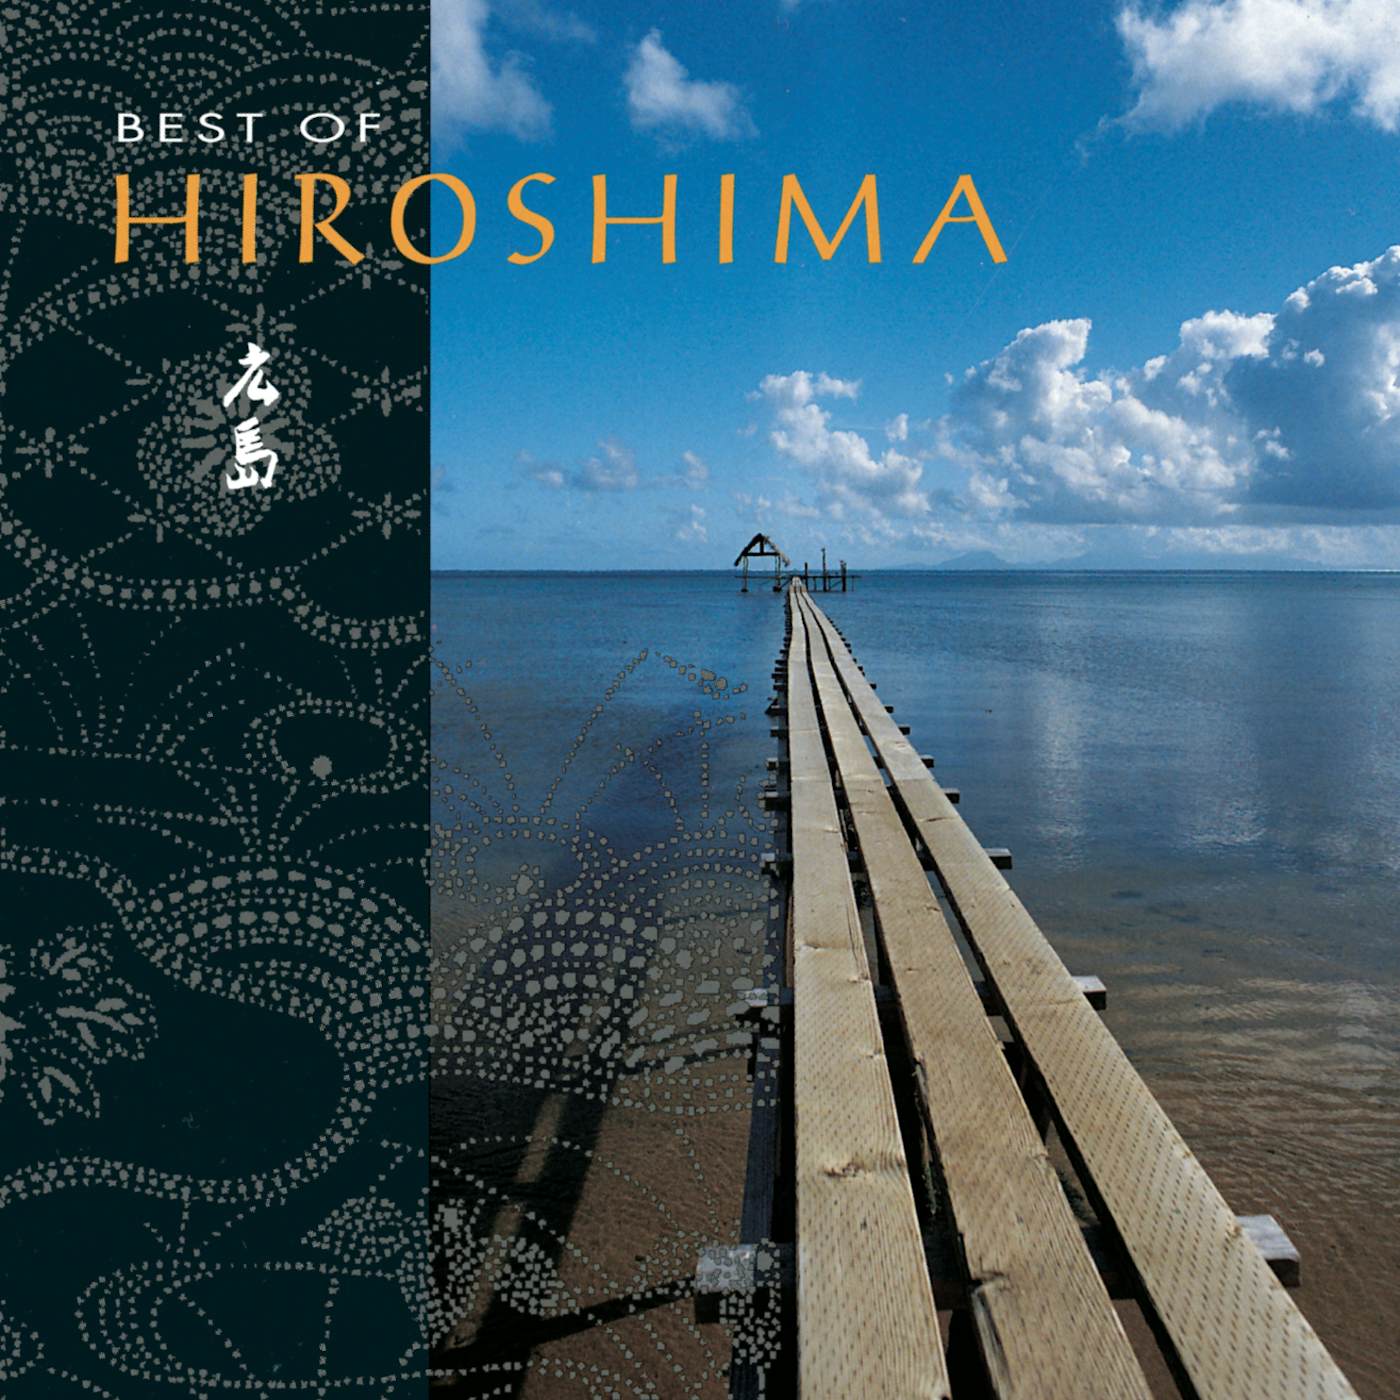 Hiroshima BEST OF CD